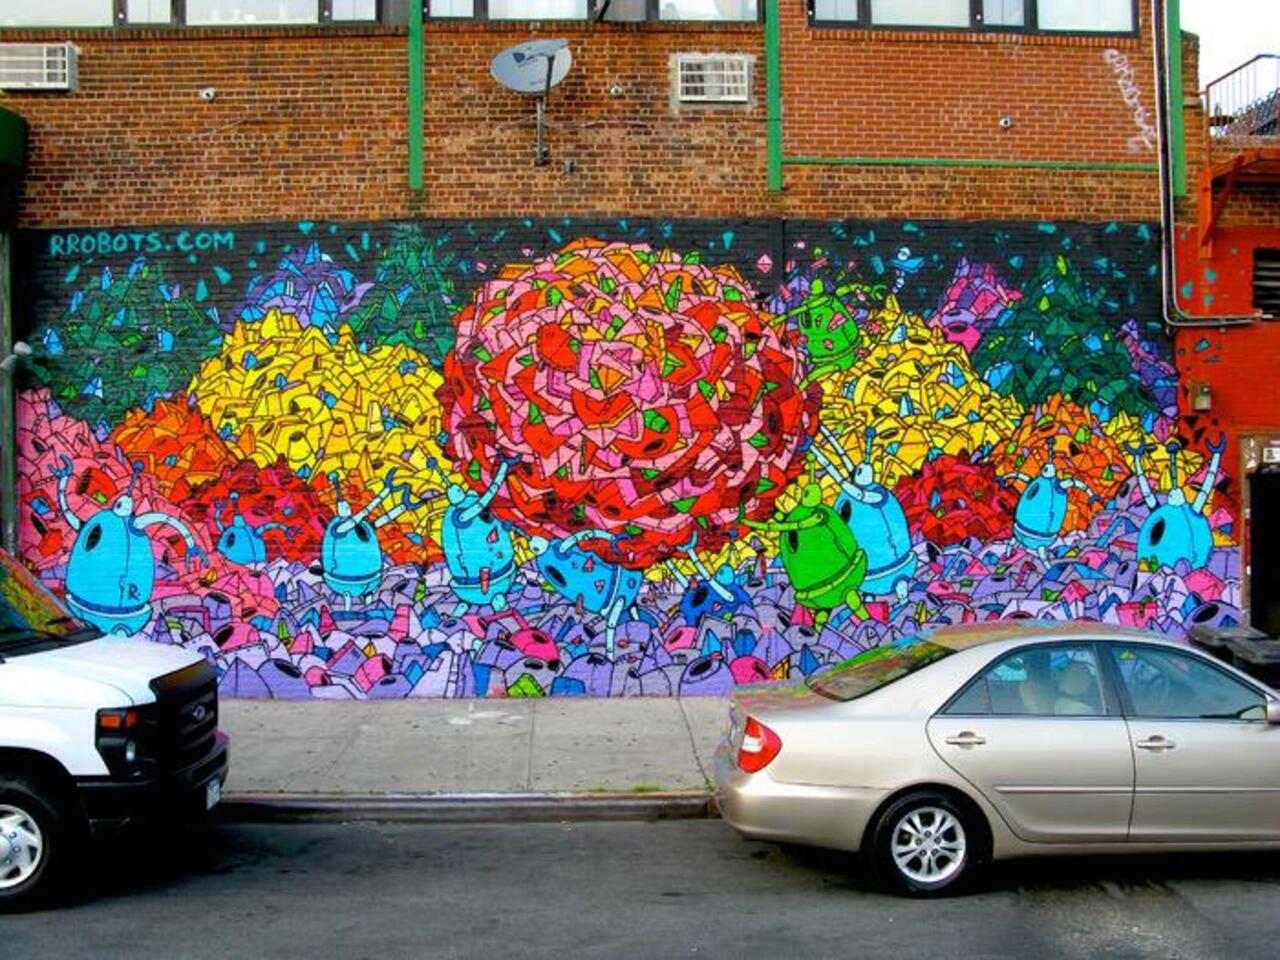 Rrobots   Brooklyn, NY Oakland, CA
#streetart #art #mural #graffiti http://t.co/fYW7YXLPm5 via @Pitchuskita.